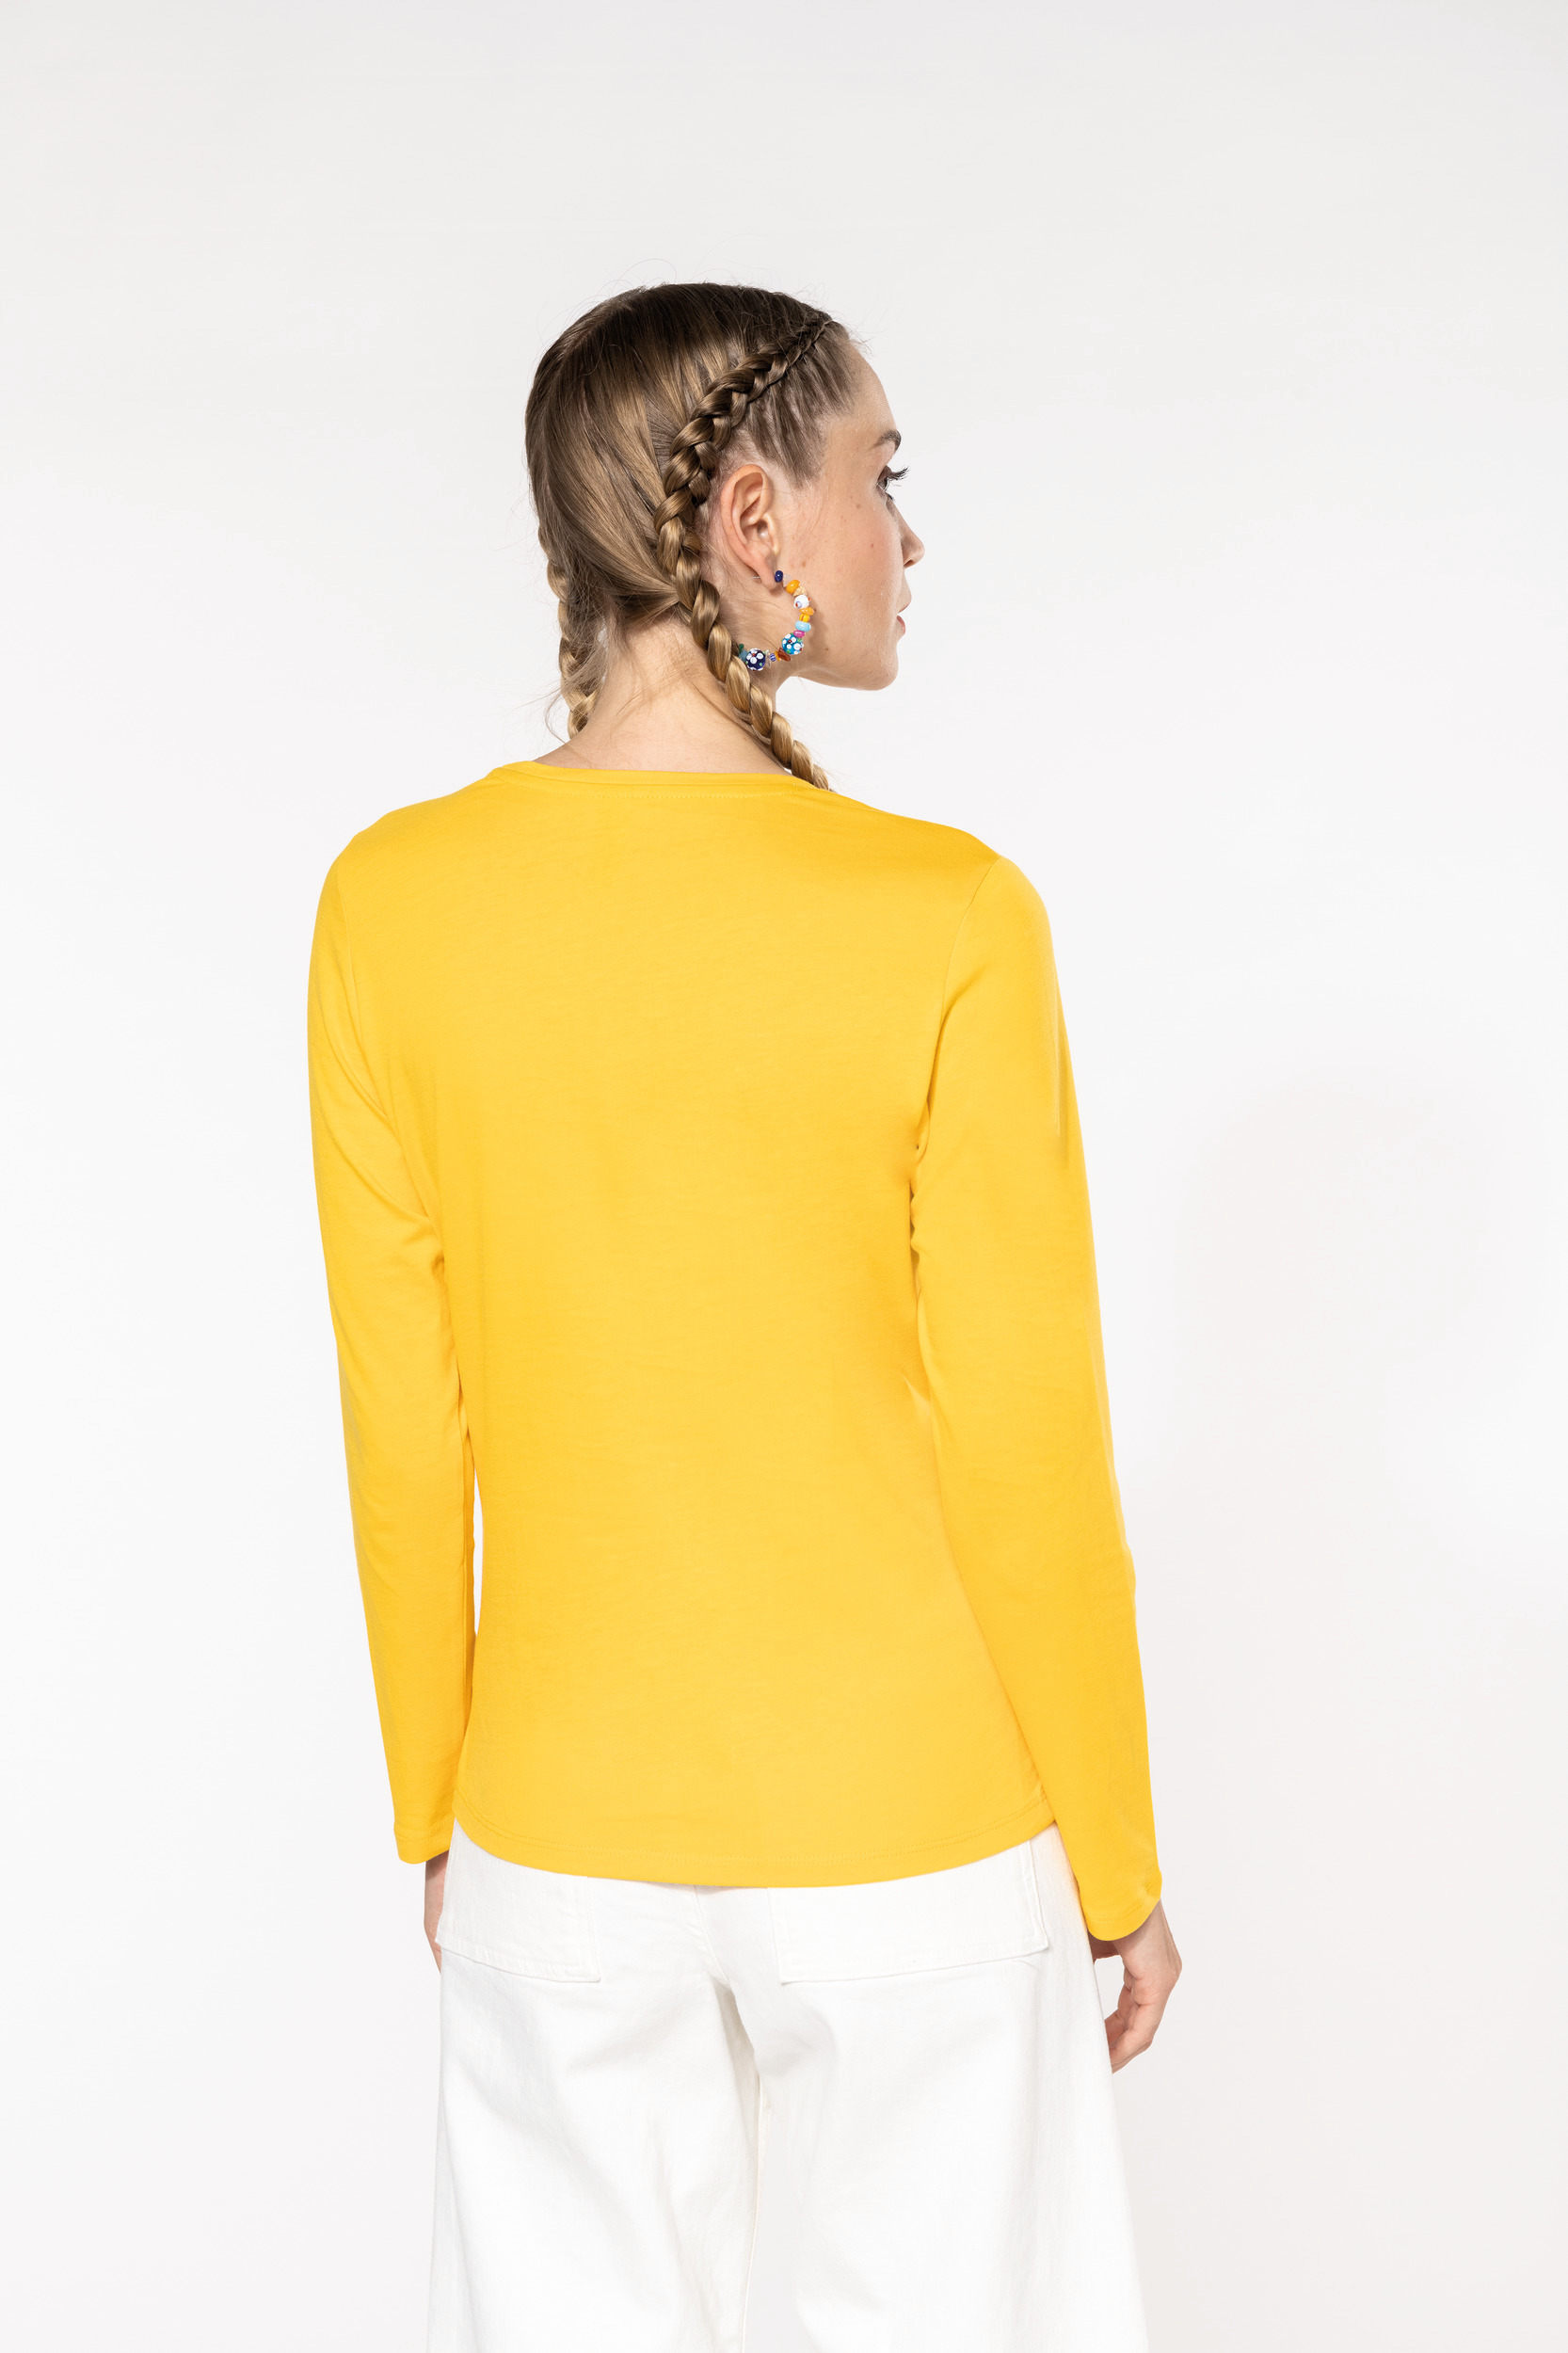 Camiseta de manga larga blanca lisa para mujer en un paquete de moda para  mujer, cuello redondo, manga corta, vestido amarillo para mujer